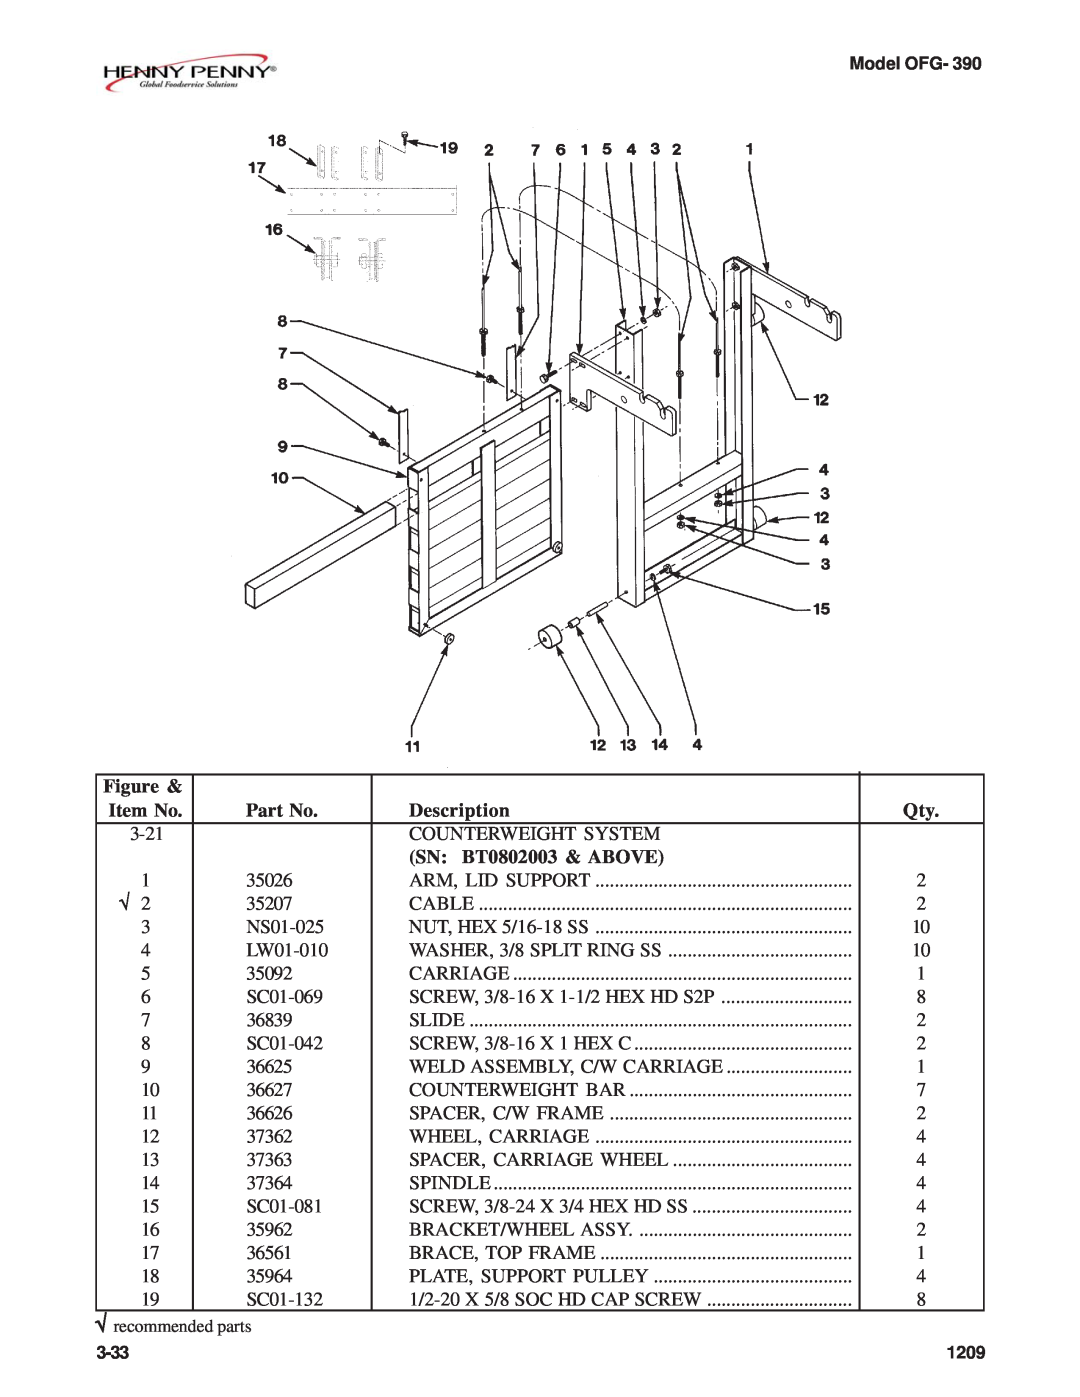 Henny Penny OFG-392 technical manual Figure, Item No, Part No, Description, SN: BT0802003 & ABOVE 